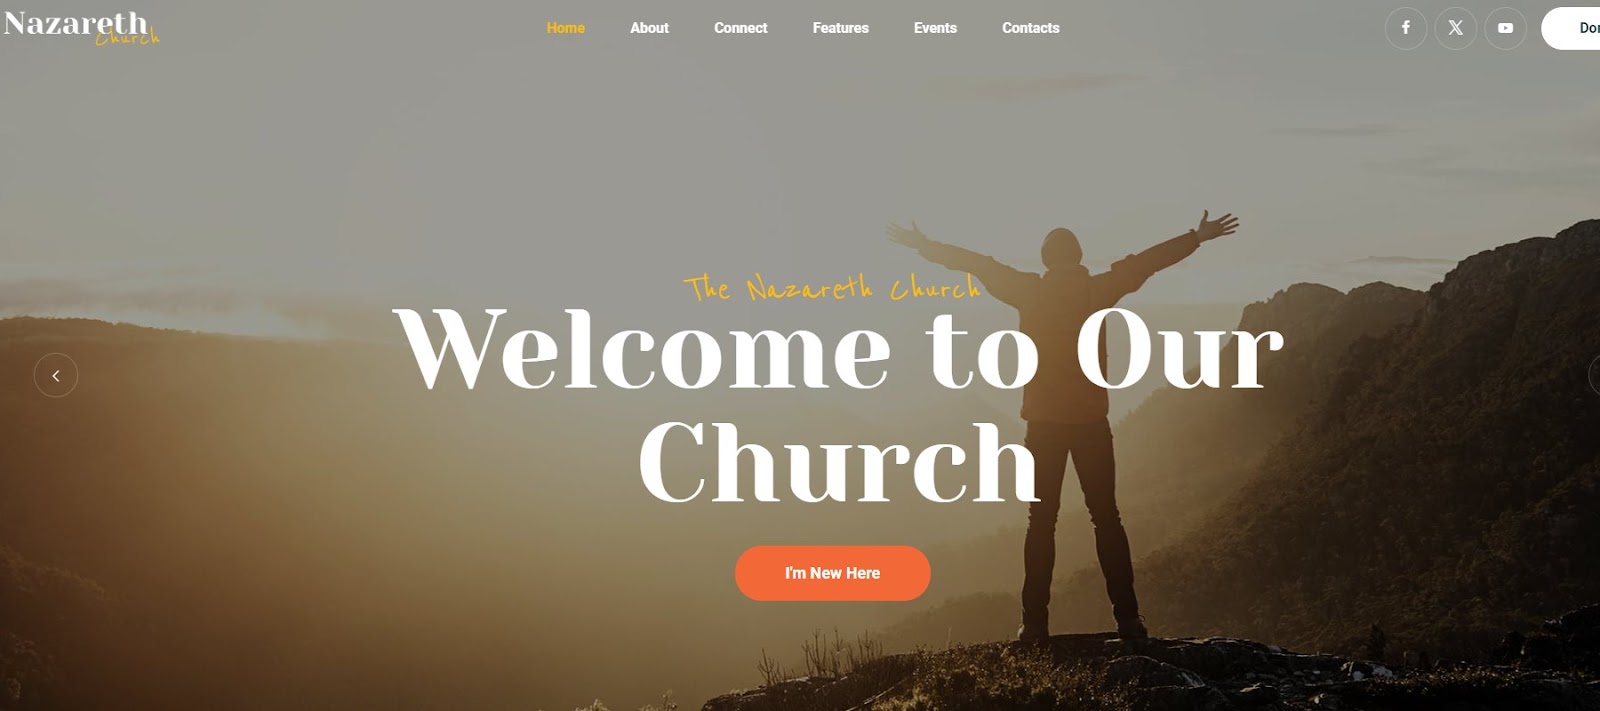 Nazareth WordPress church theme